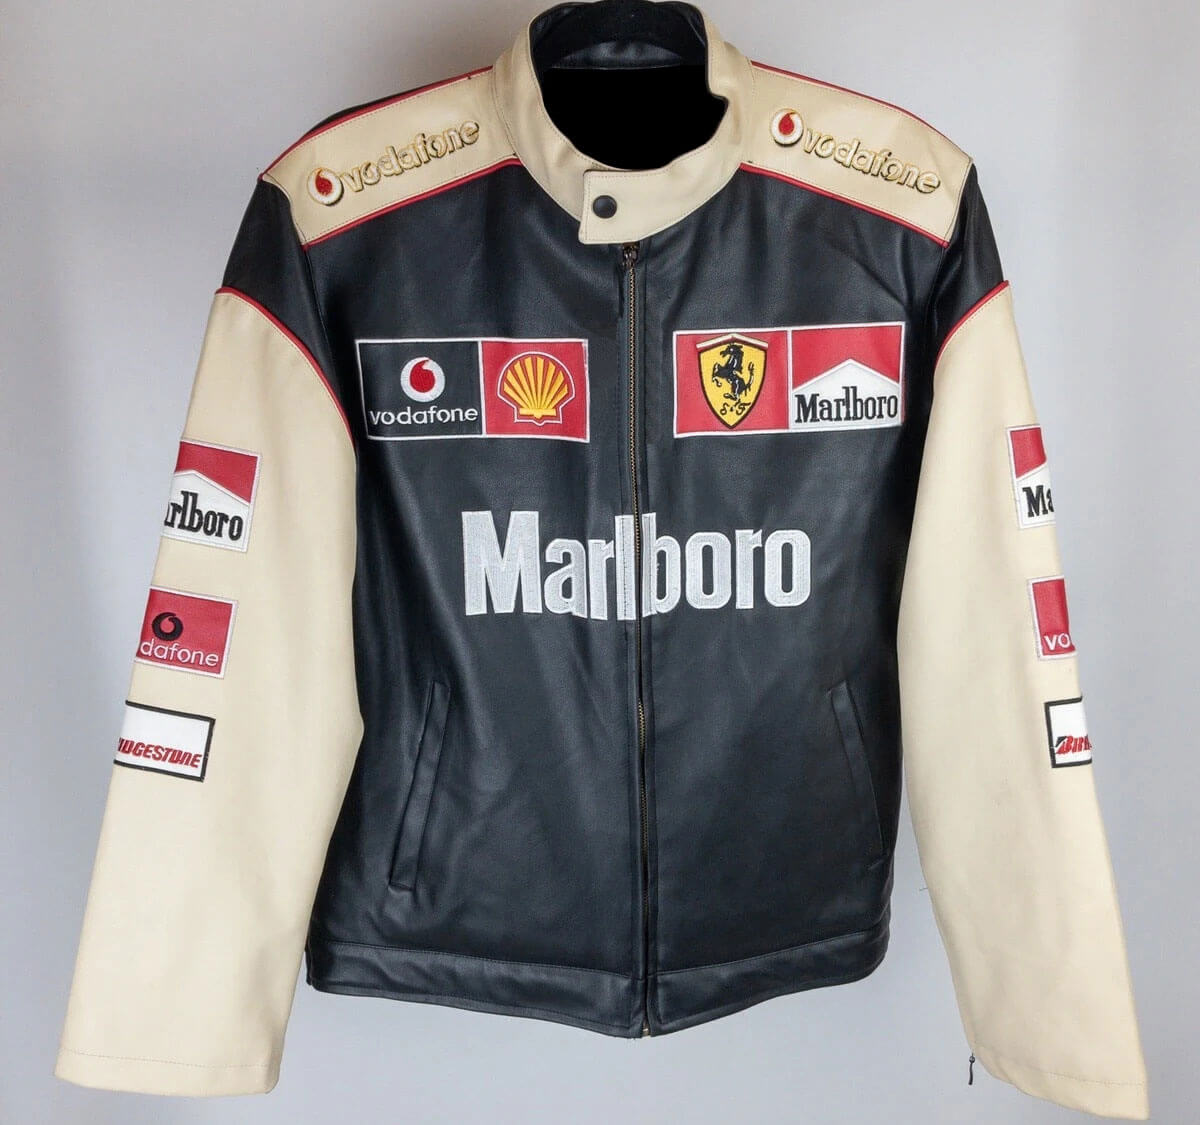 Black Ferrari Marlboro Motorcycle Racing Leather Jacket - Maker of Jacket